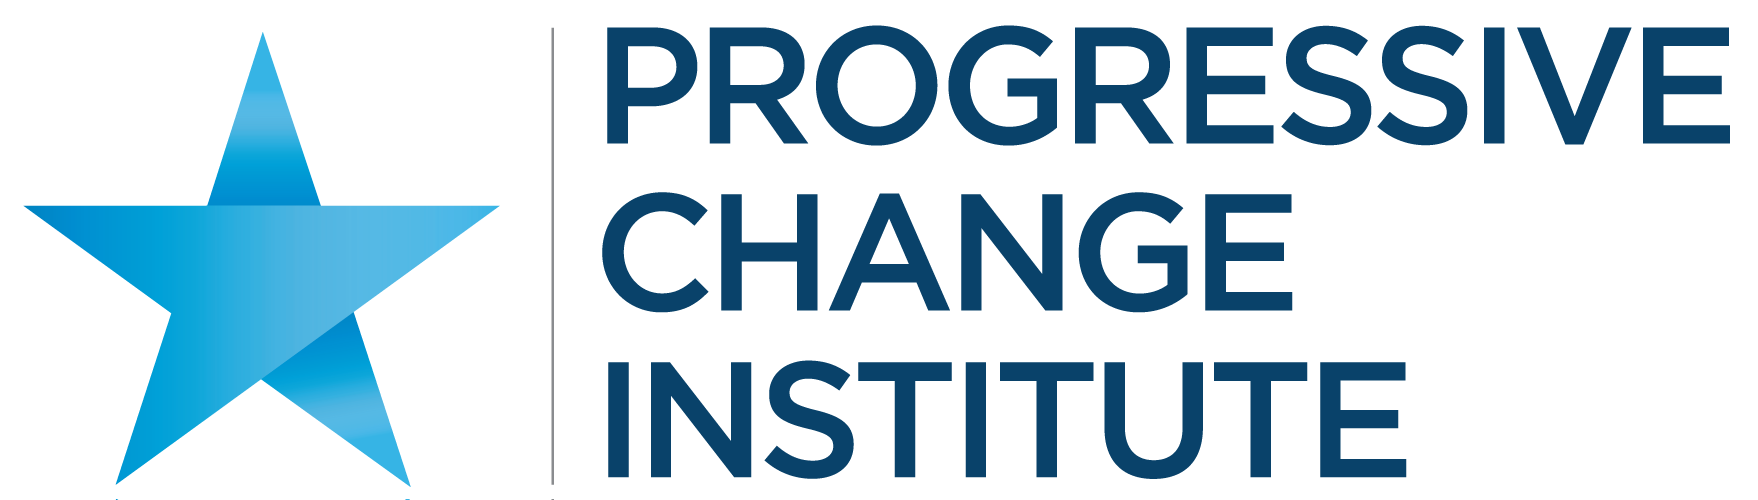 Progressive Change Institute